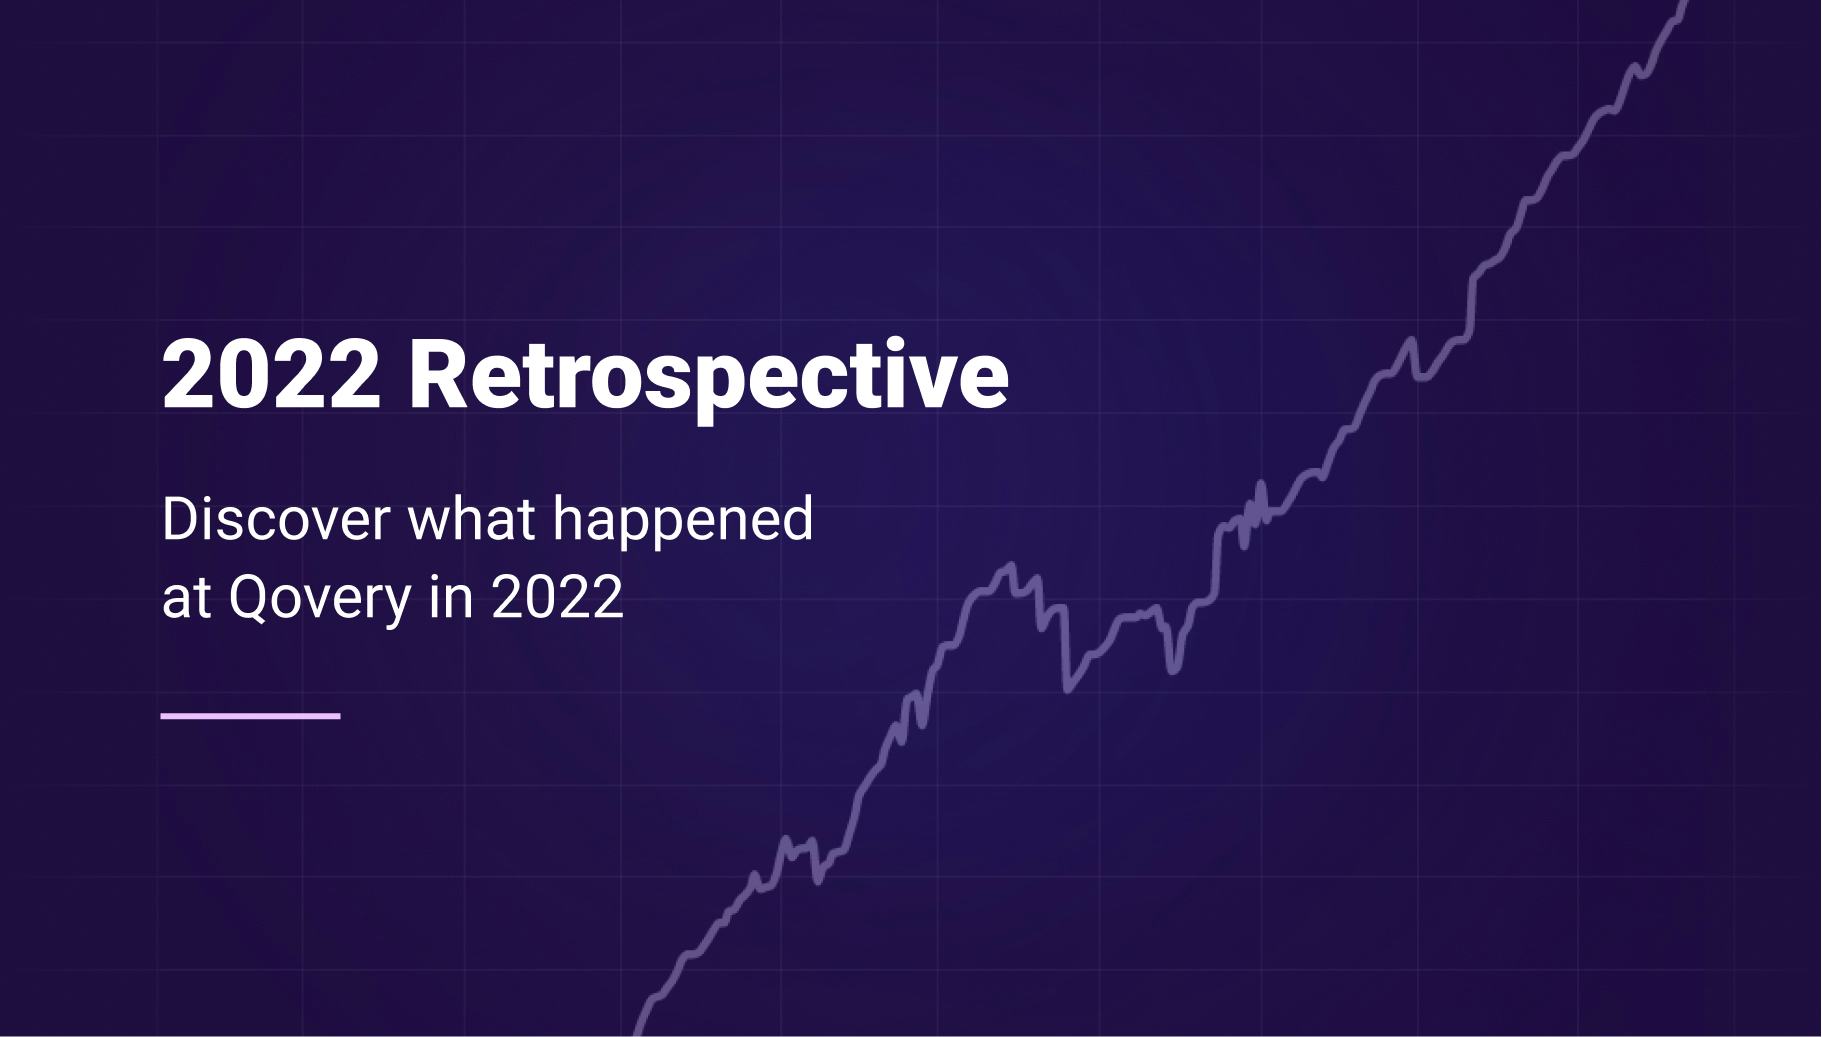 2022 Retrospective - Looking ahead to 2023